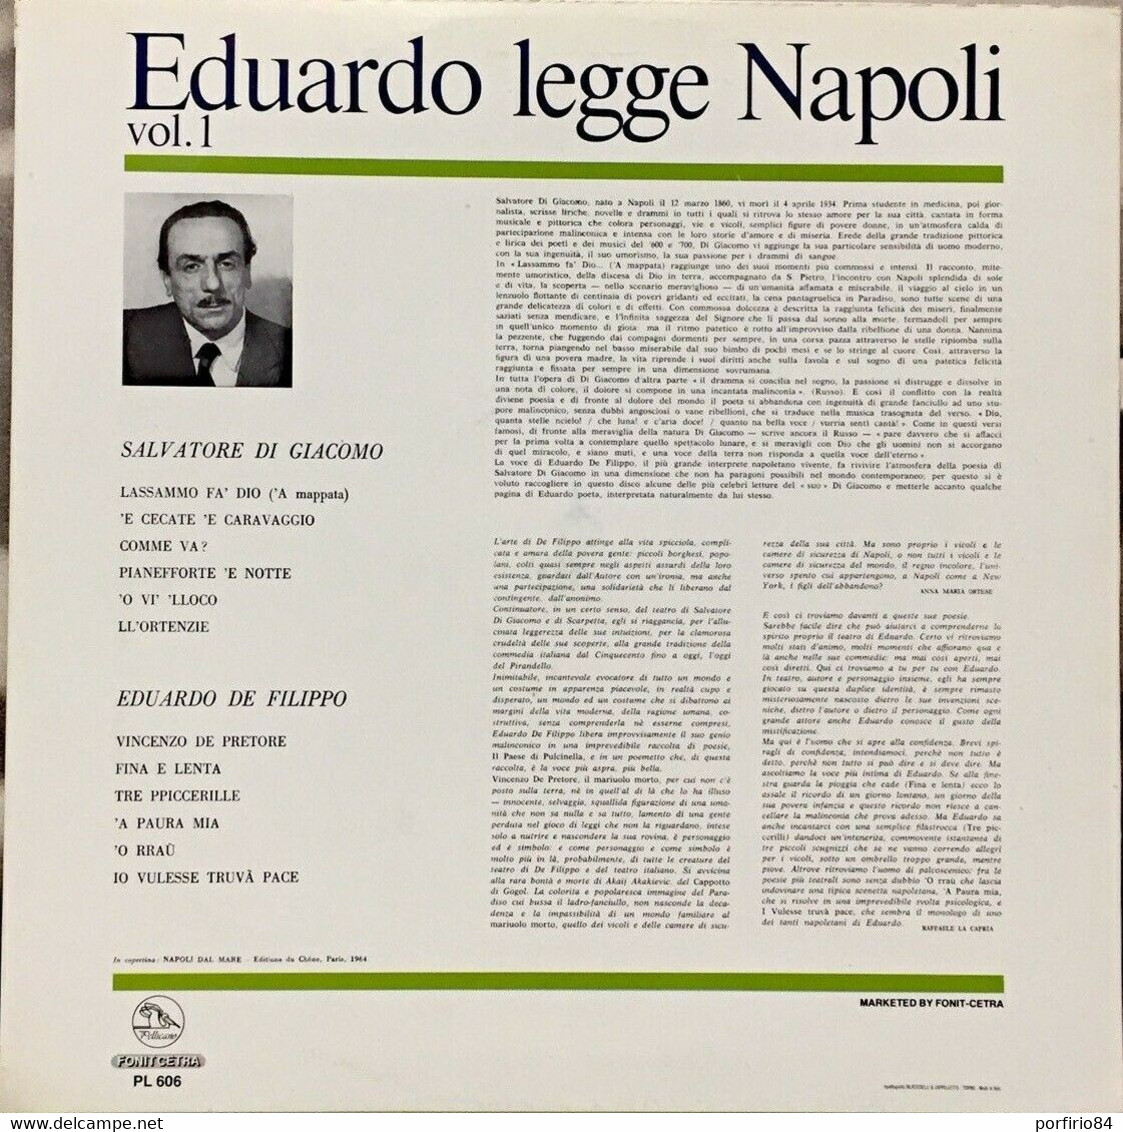 EDUARDO DE FILIPPO RARO LP - EDUARDO LEGGE NAPOLI VOL. 1 SALVATORE DI GIACOMO - Autres - Musique Italienne